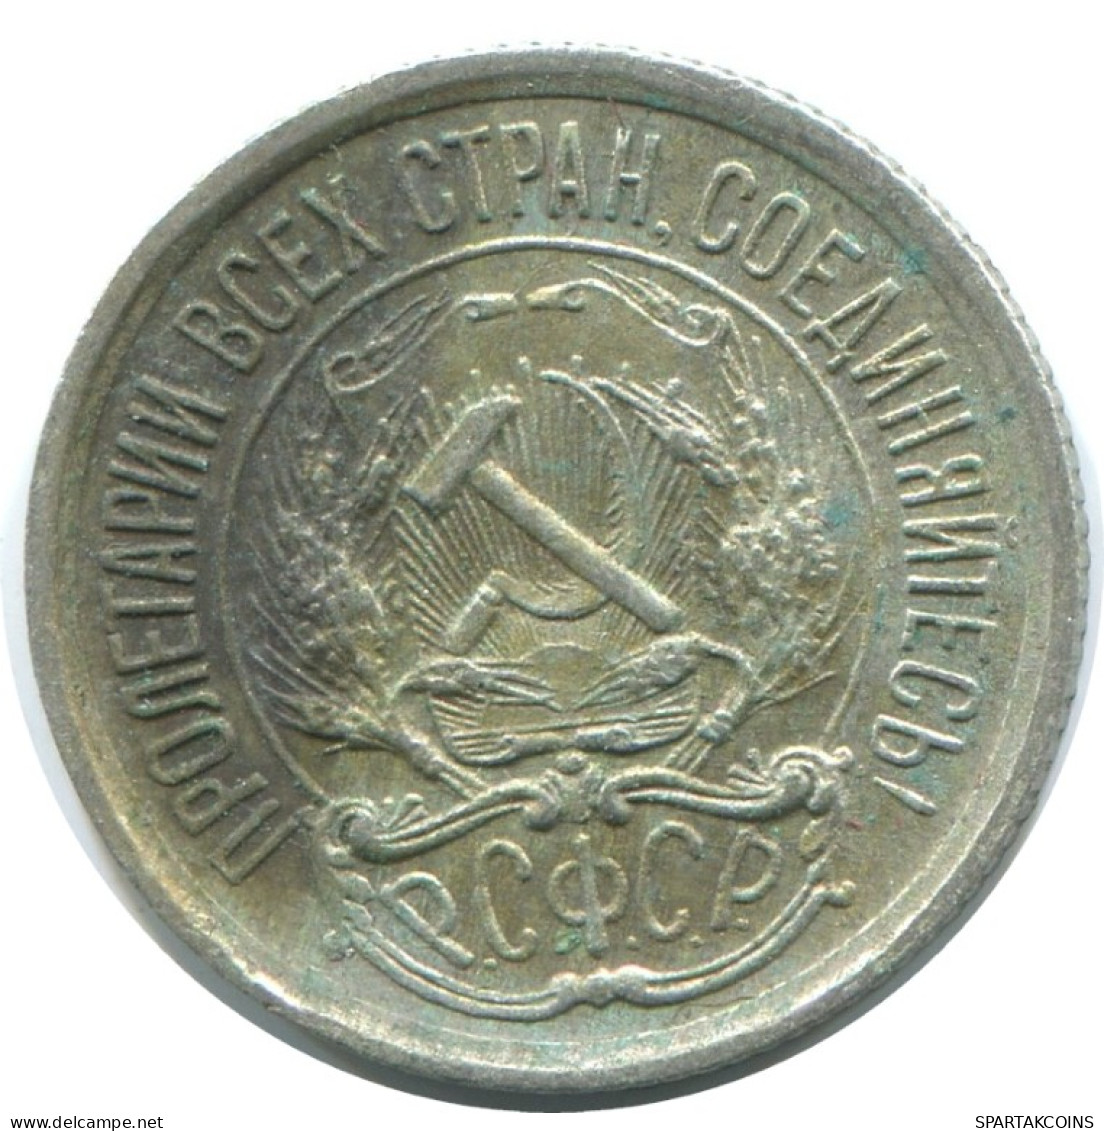 10 KOPEKS 1923 RUSSIA RSFSR SILVER Coin HIGH GRADE #AE963.4.U.A - Rusland